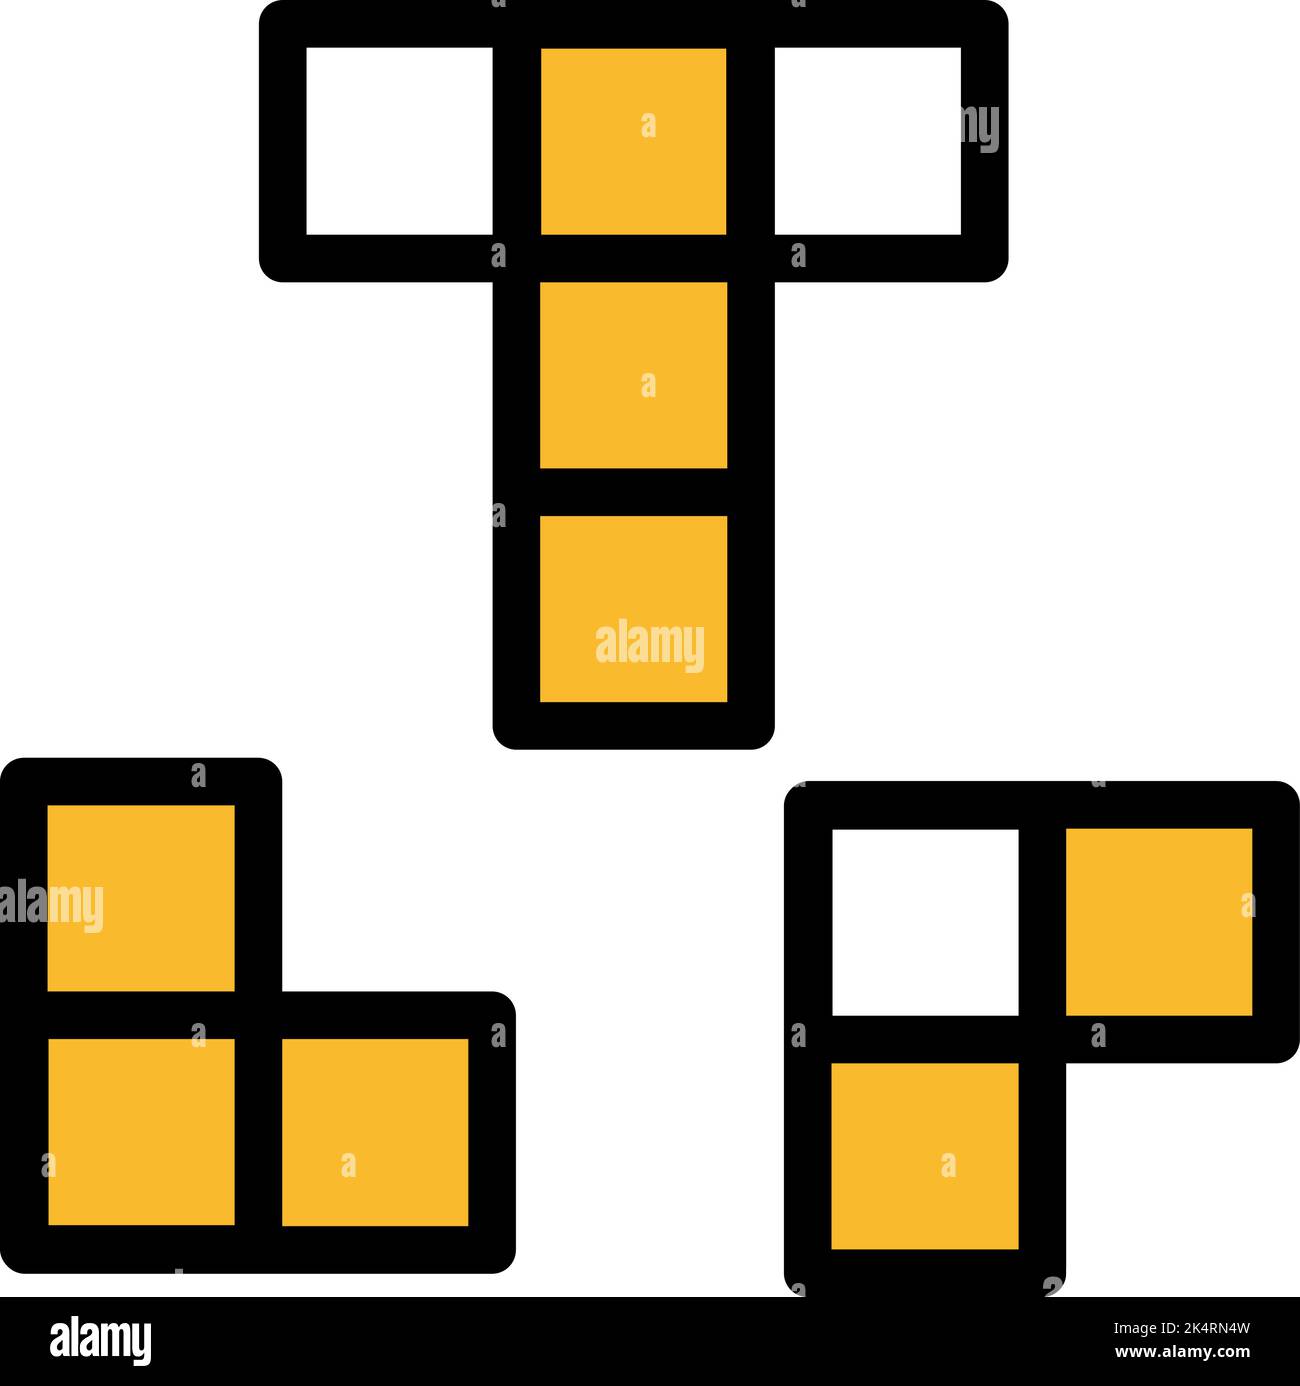 Game Bricks Tetris Template. Color Pixel Blocks Editorial Stock